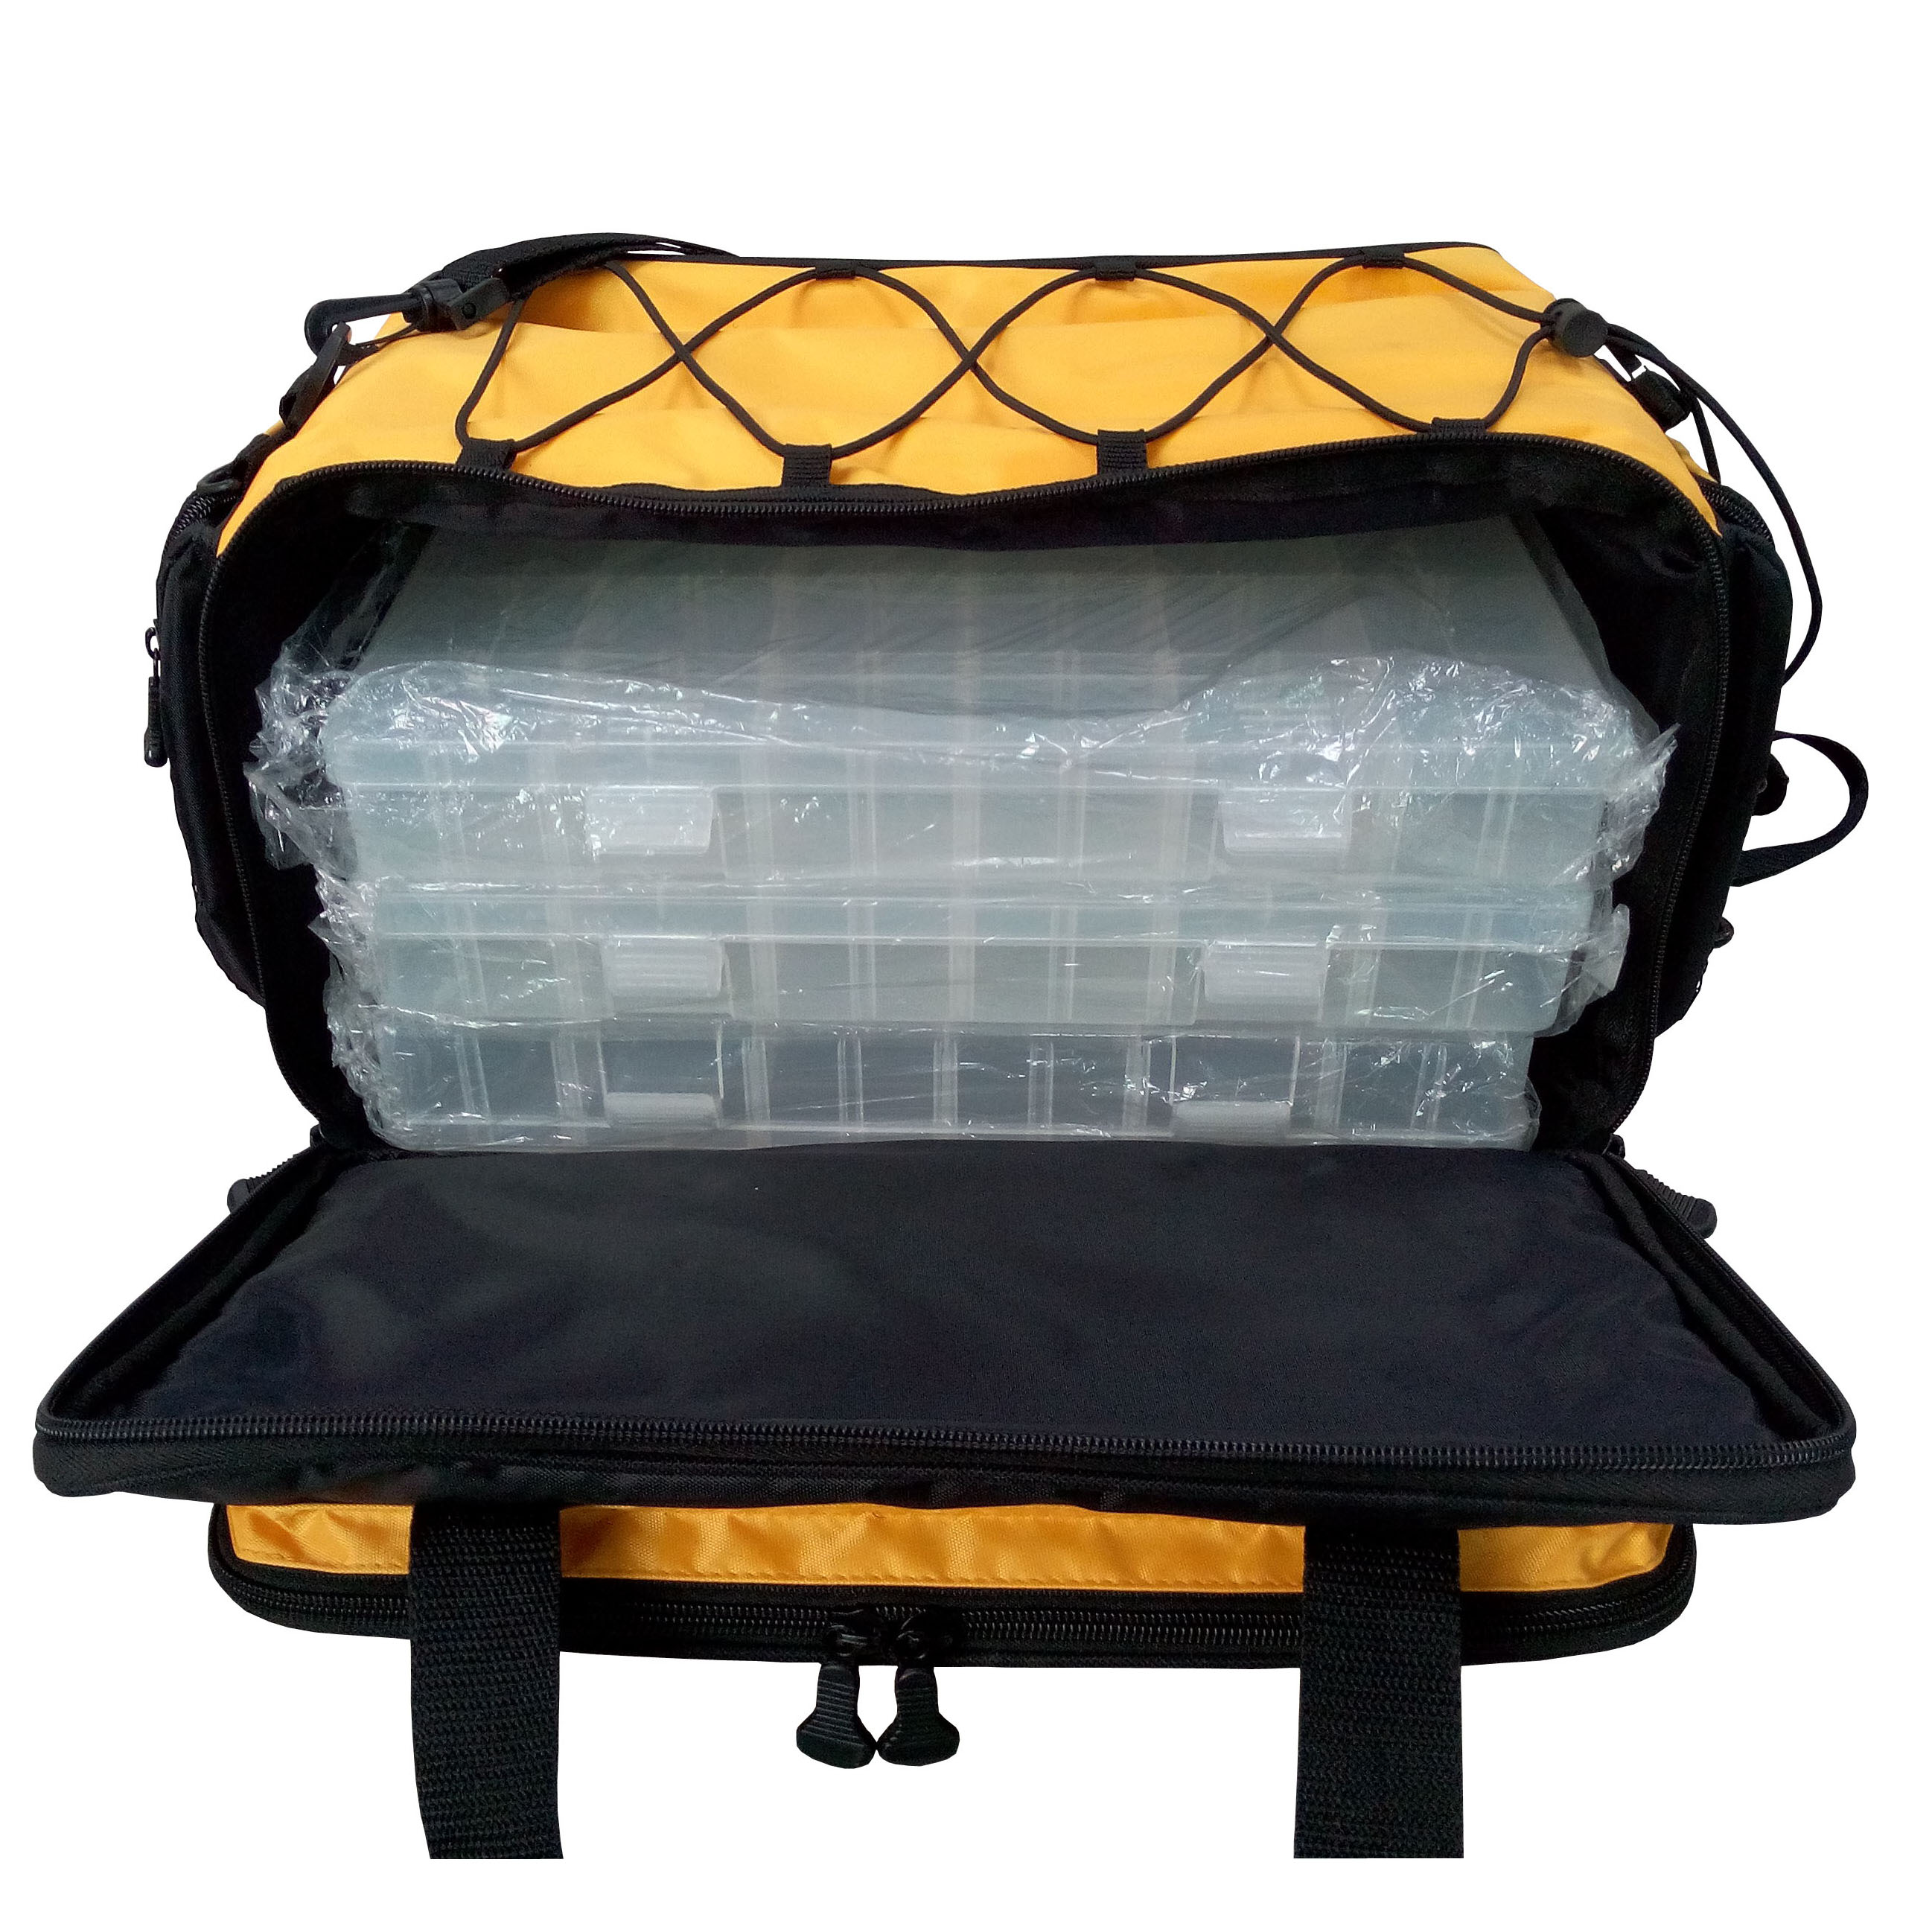 Large Capacity Multifunction Waterproof Single Shoulder Fishing Tackle Bag